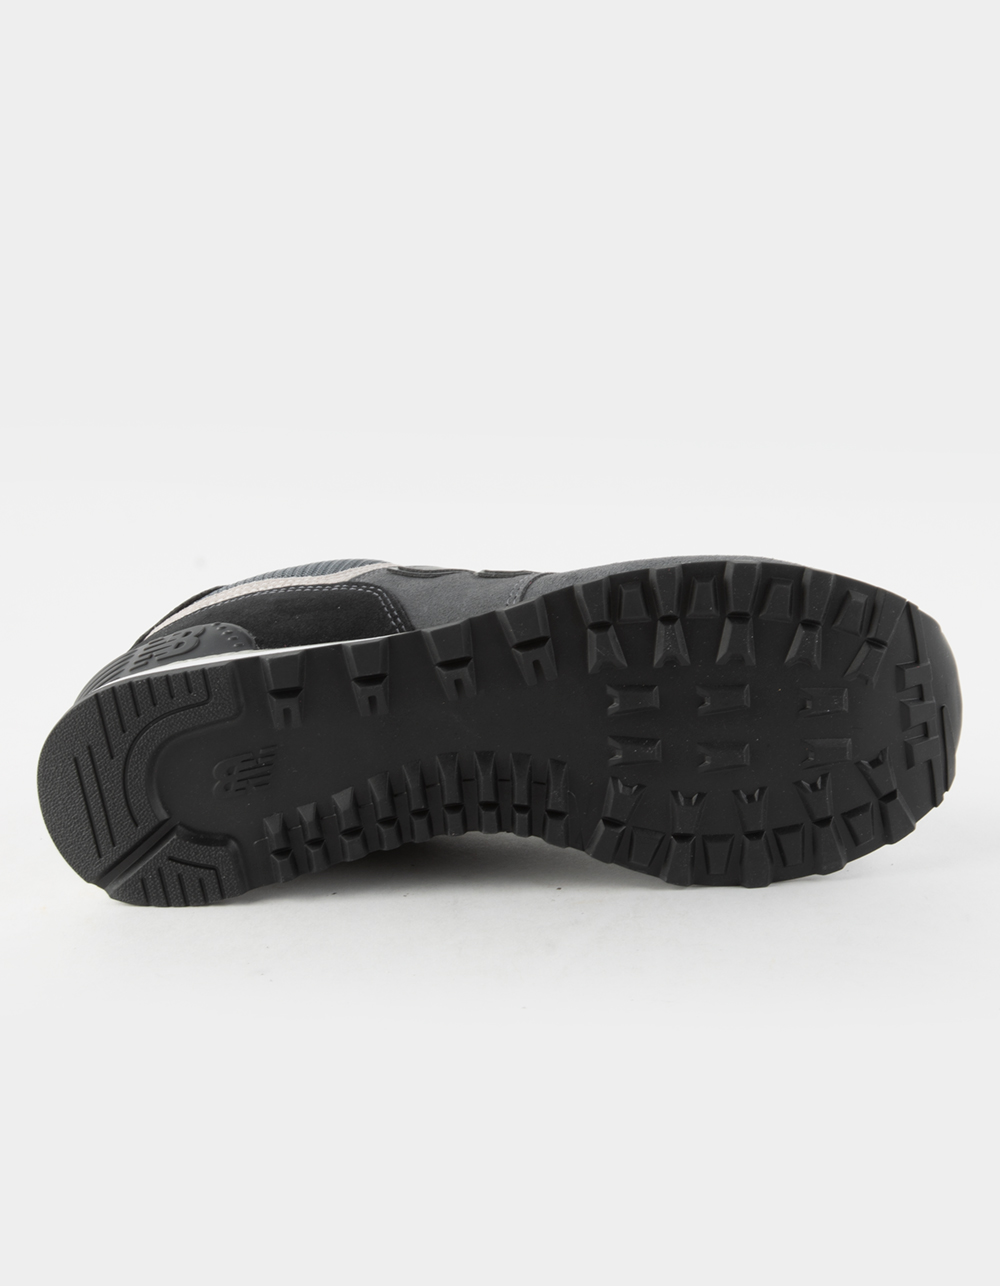 NEW BALANCE 574 Mens Shoes - GRAY/BLACK | Tillys